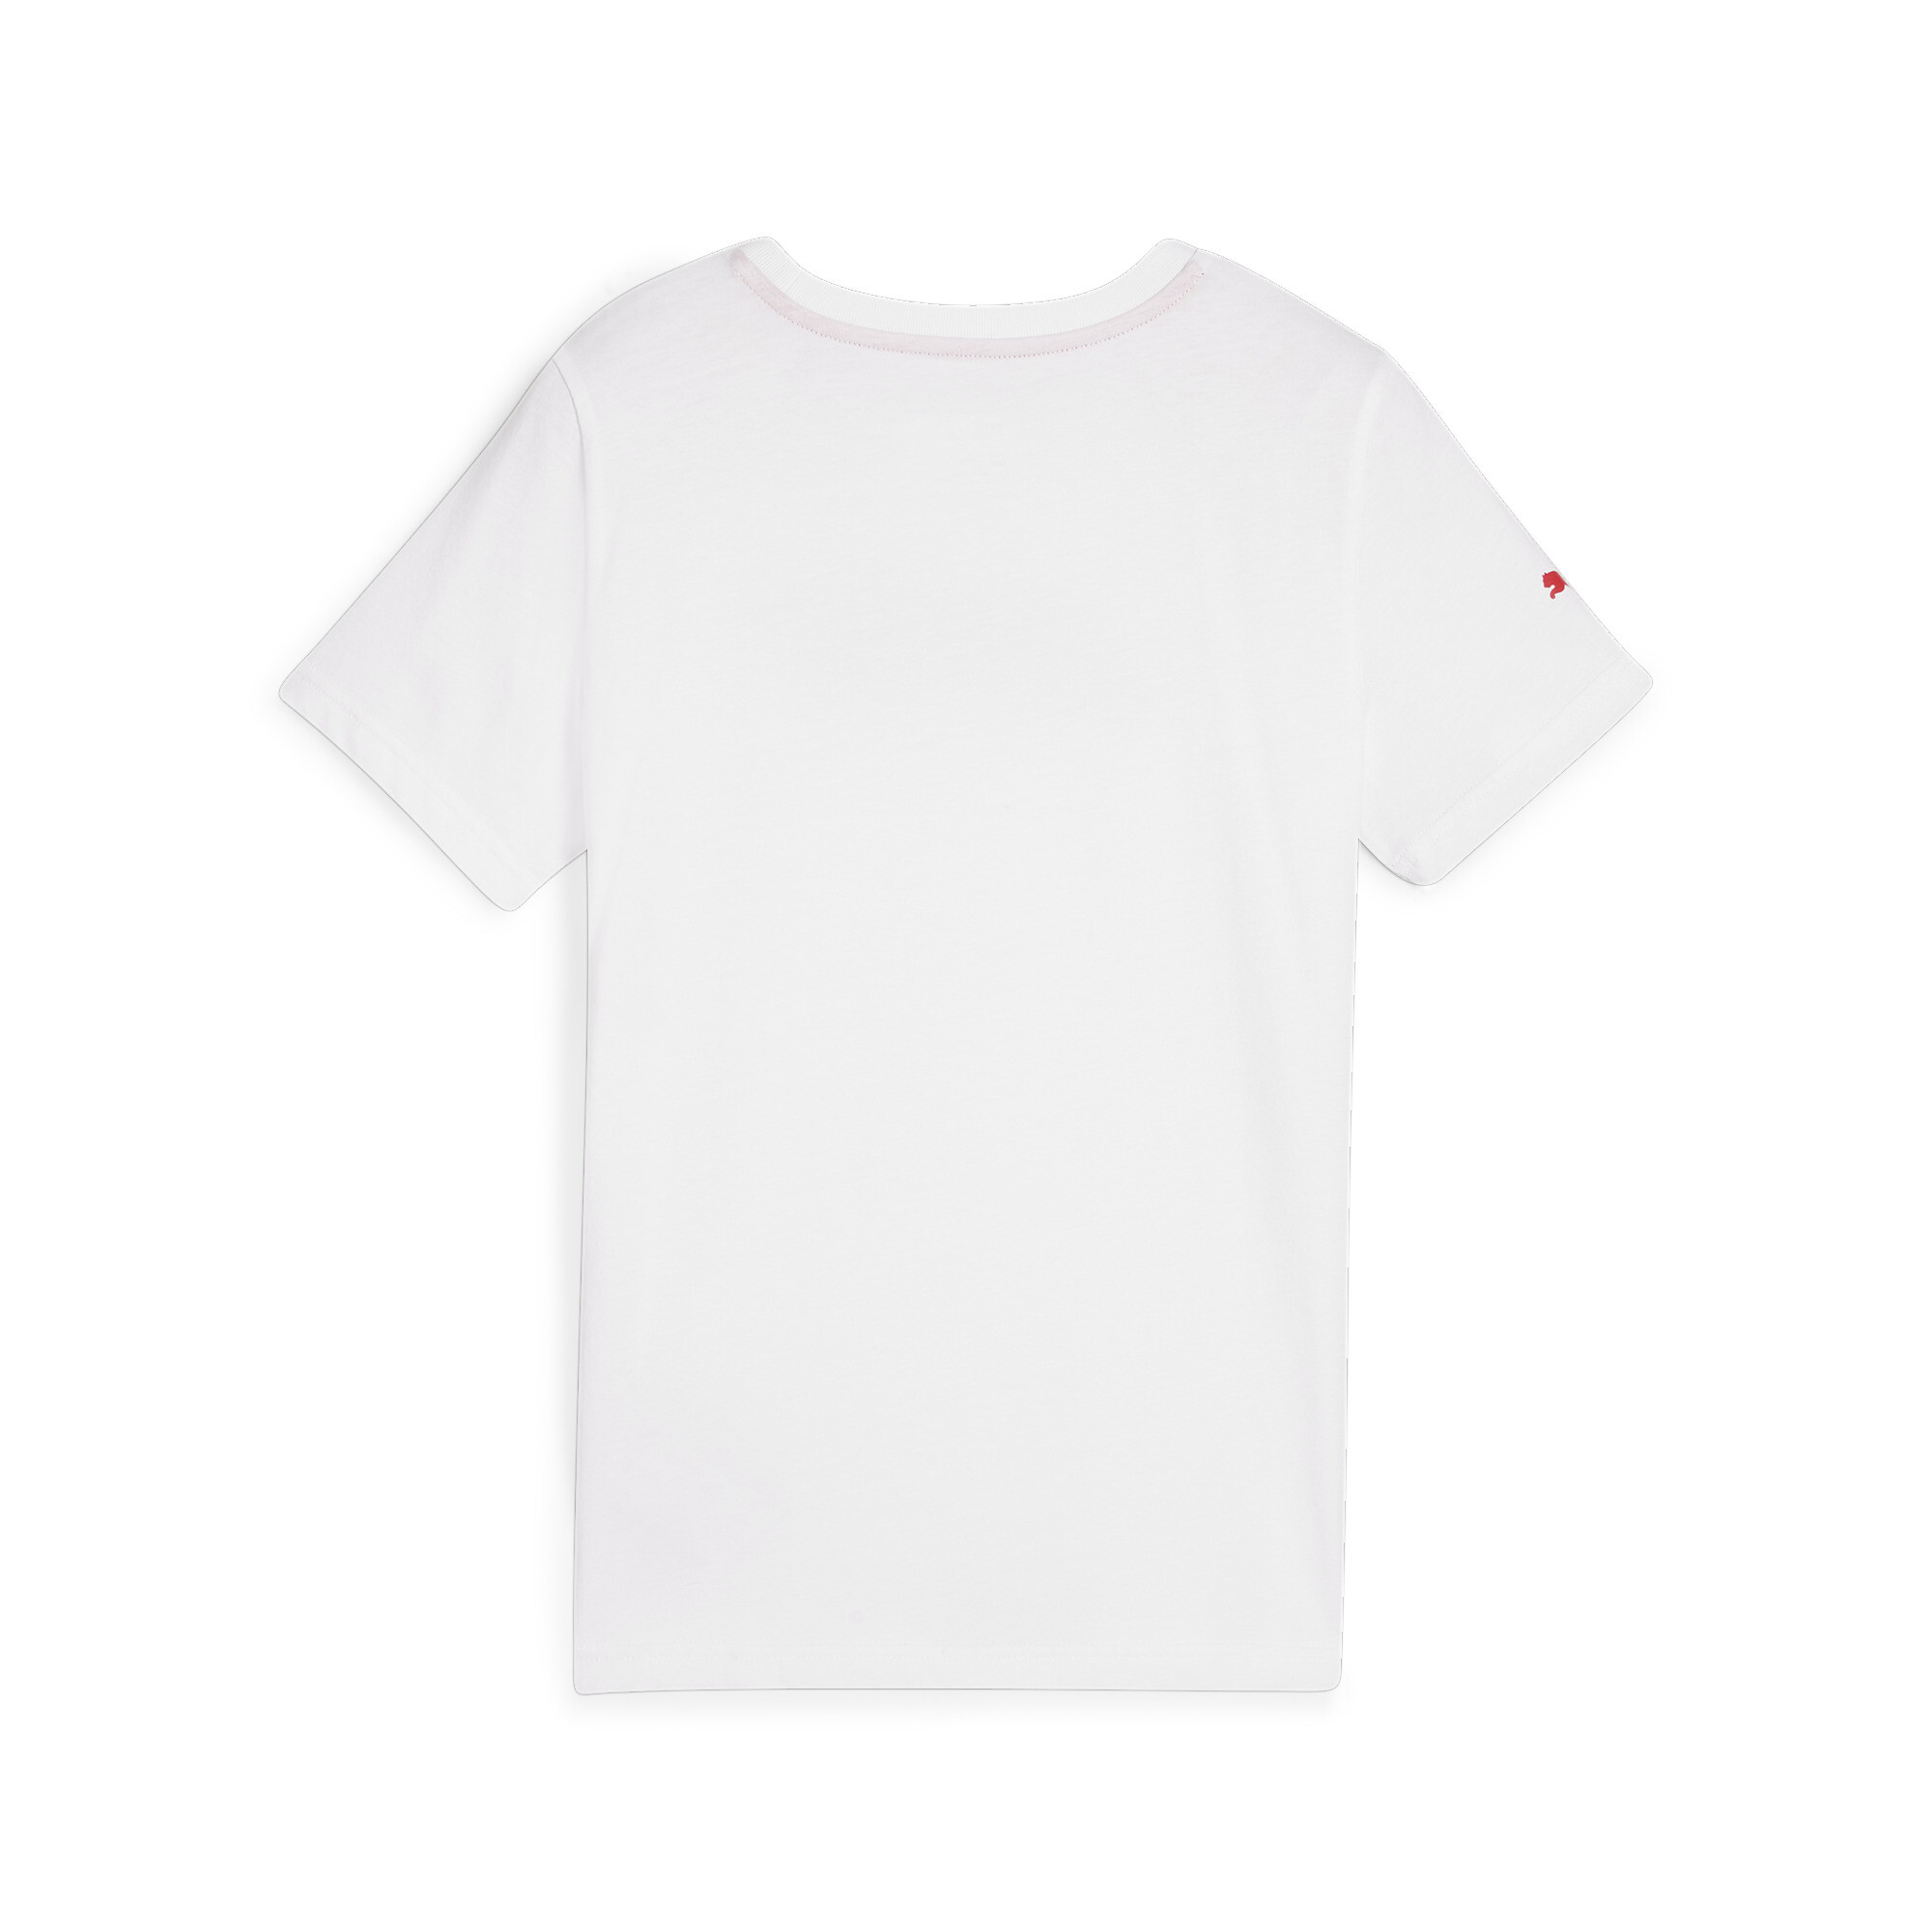 Men's Puma F1Â® ESS Youth Motorsport T-Shirt, White, Size 7-8Y, Age